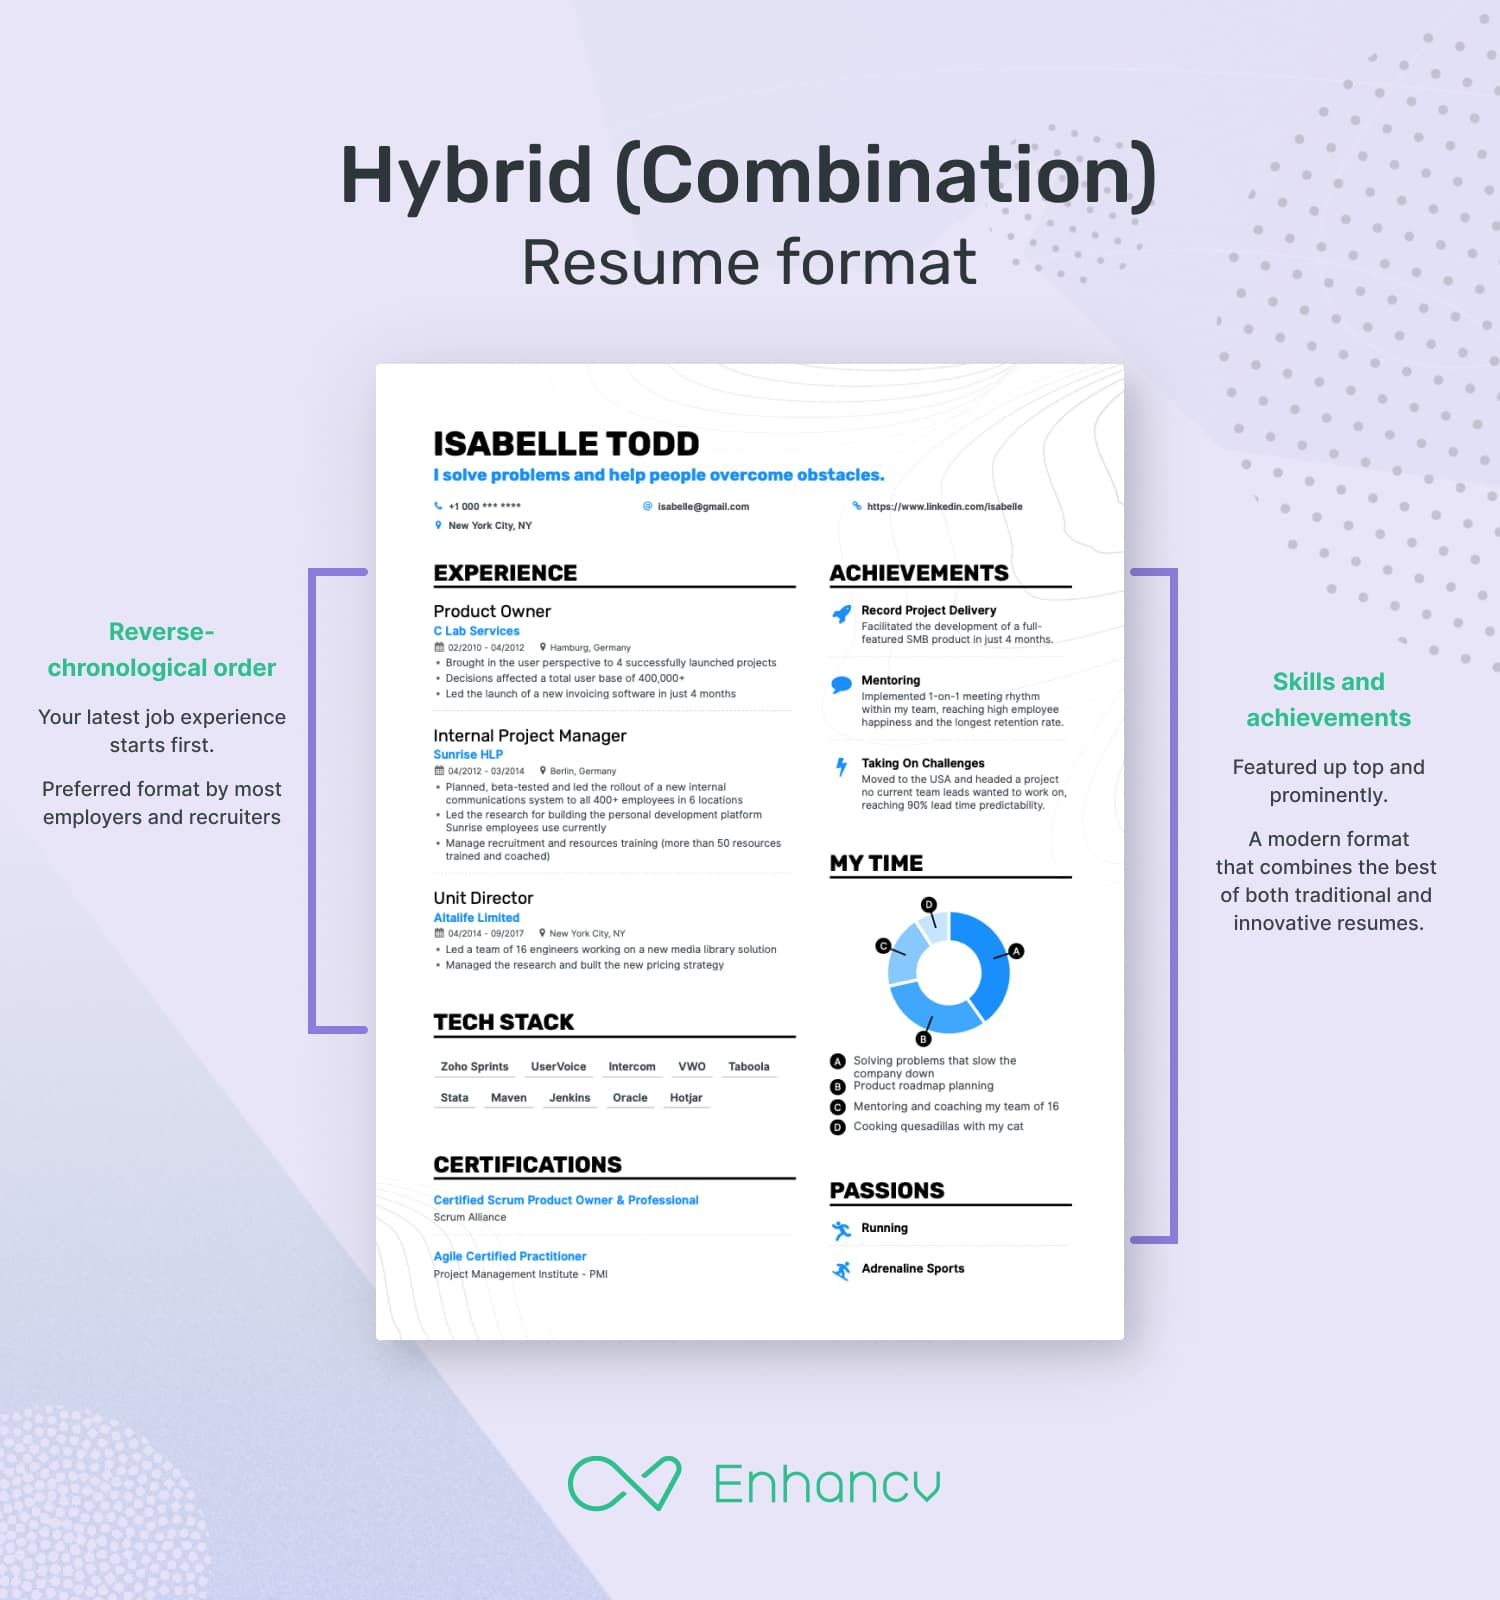 hybrid (combination) resume format built on Enhancv platform